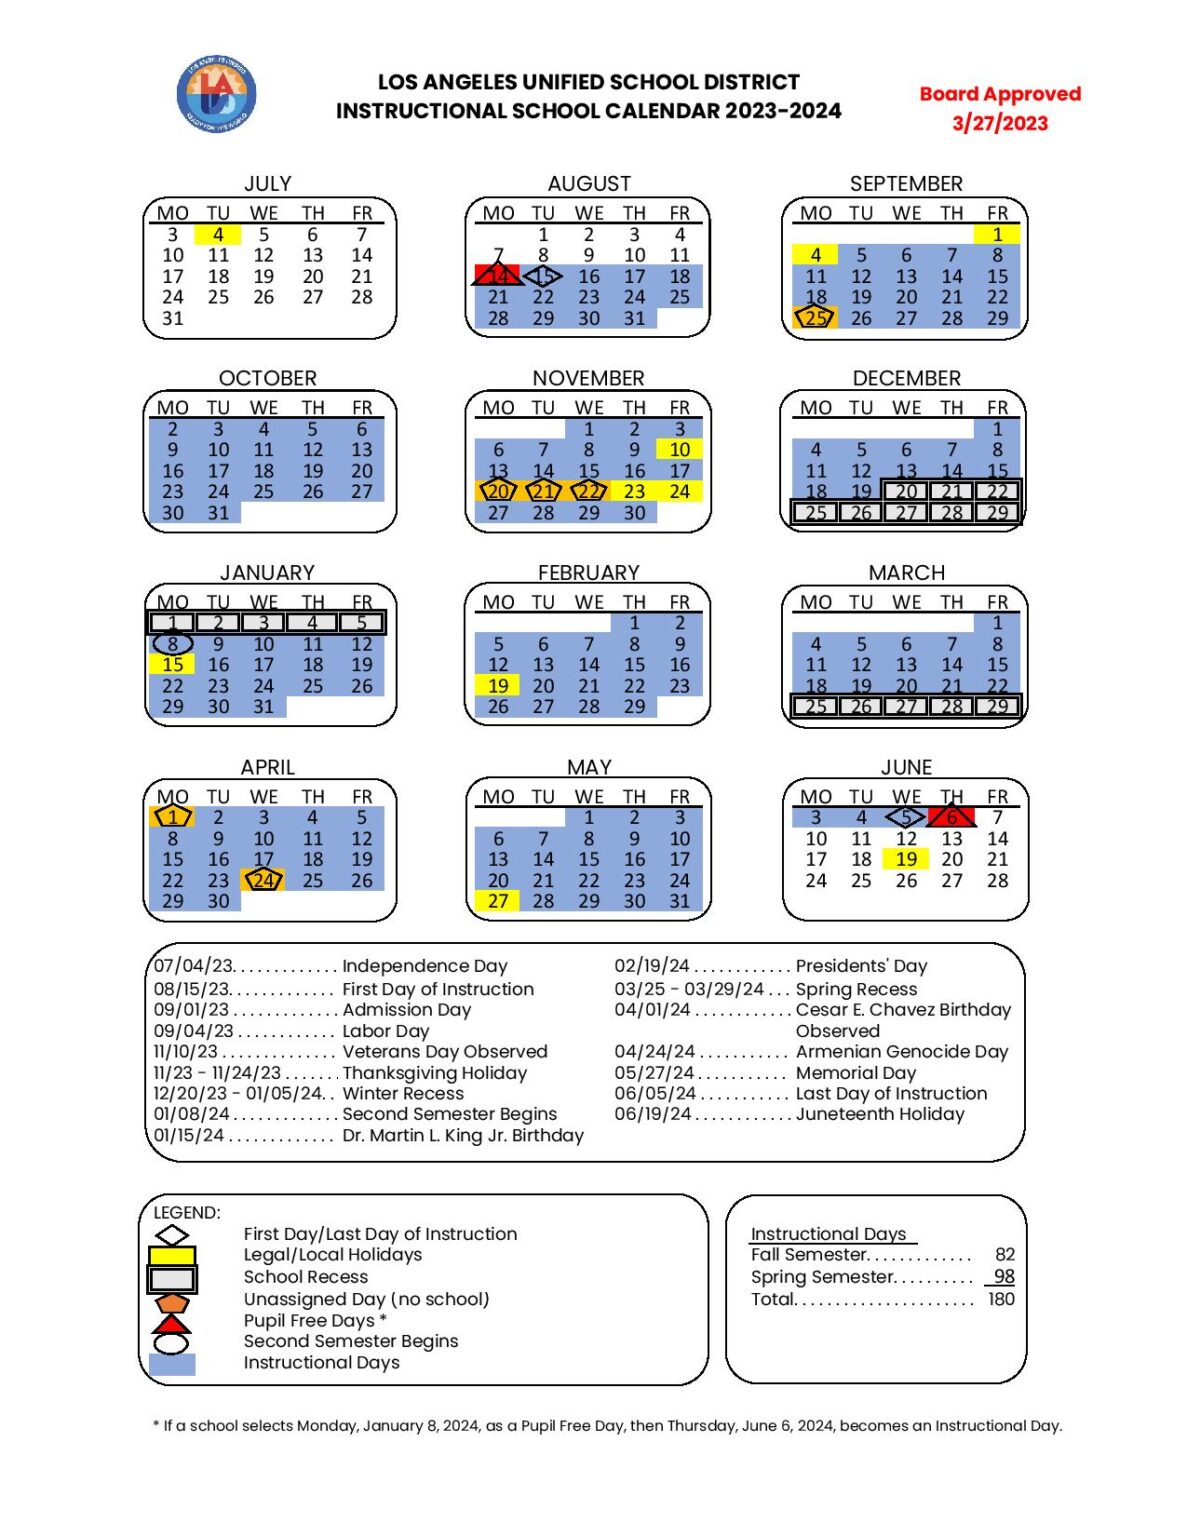 Los Angeles Unified School District Calendar 2024 2025 (LAUSD)